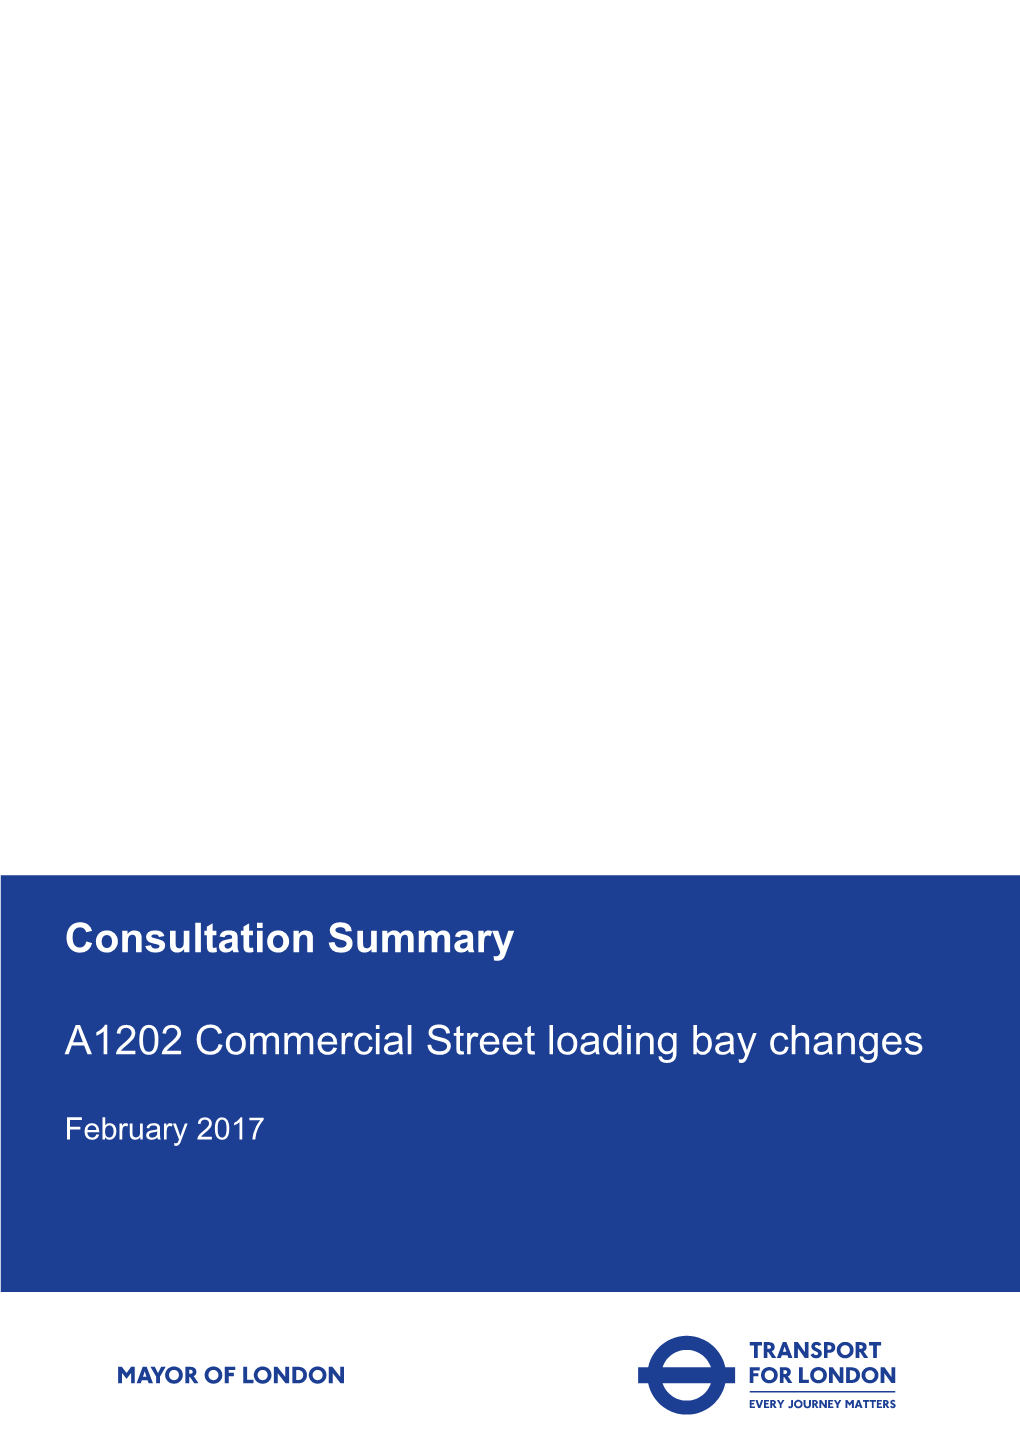 Commercial Street Taxi Rank Summary